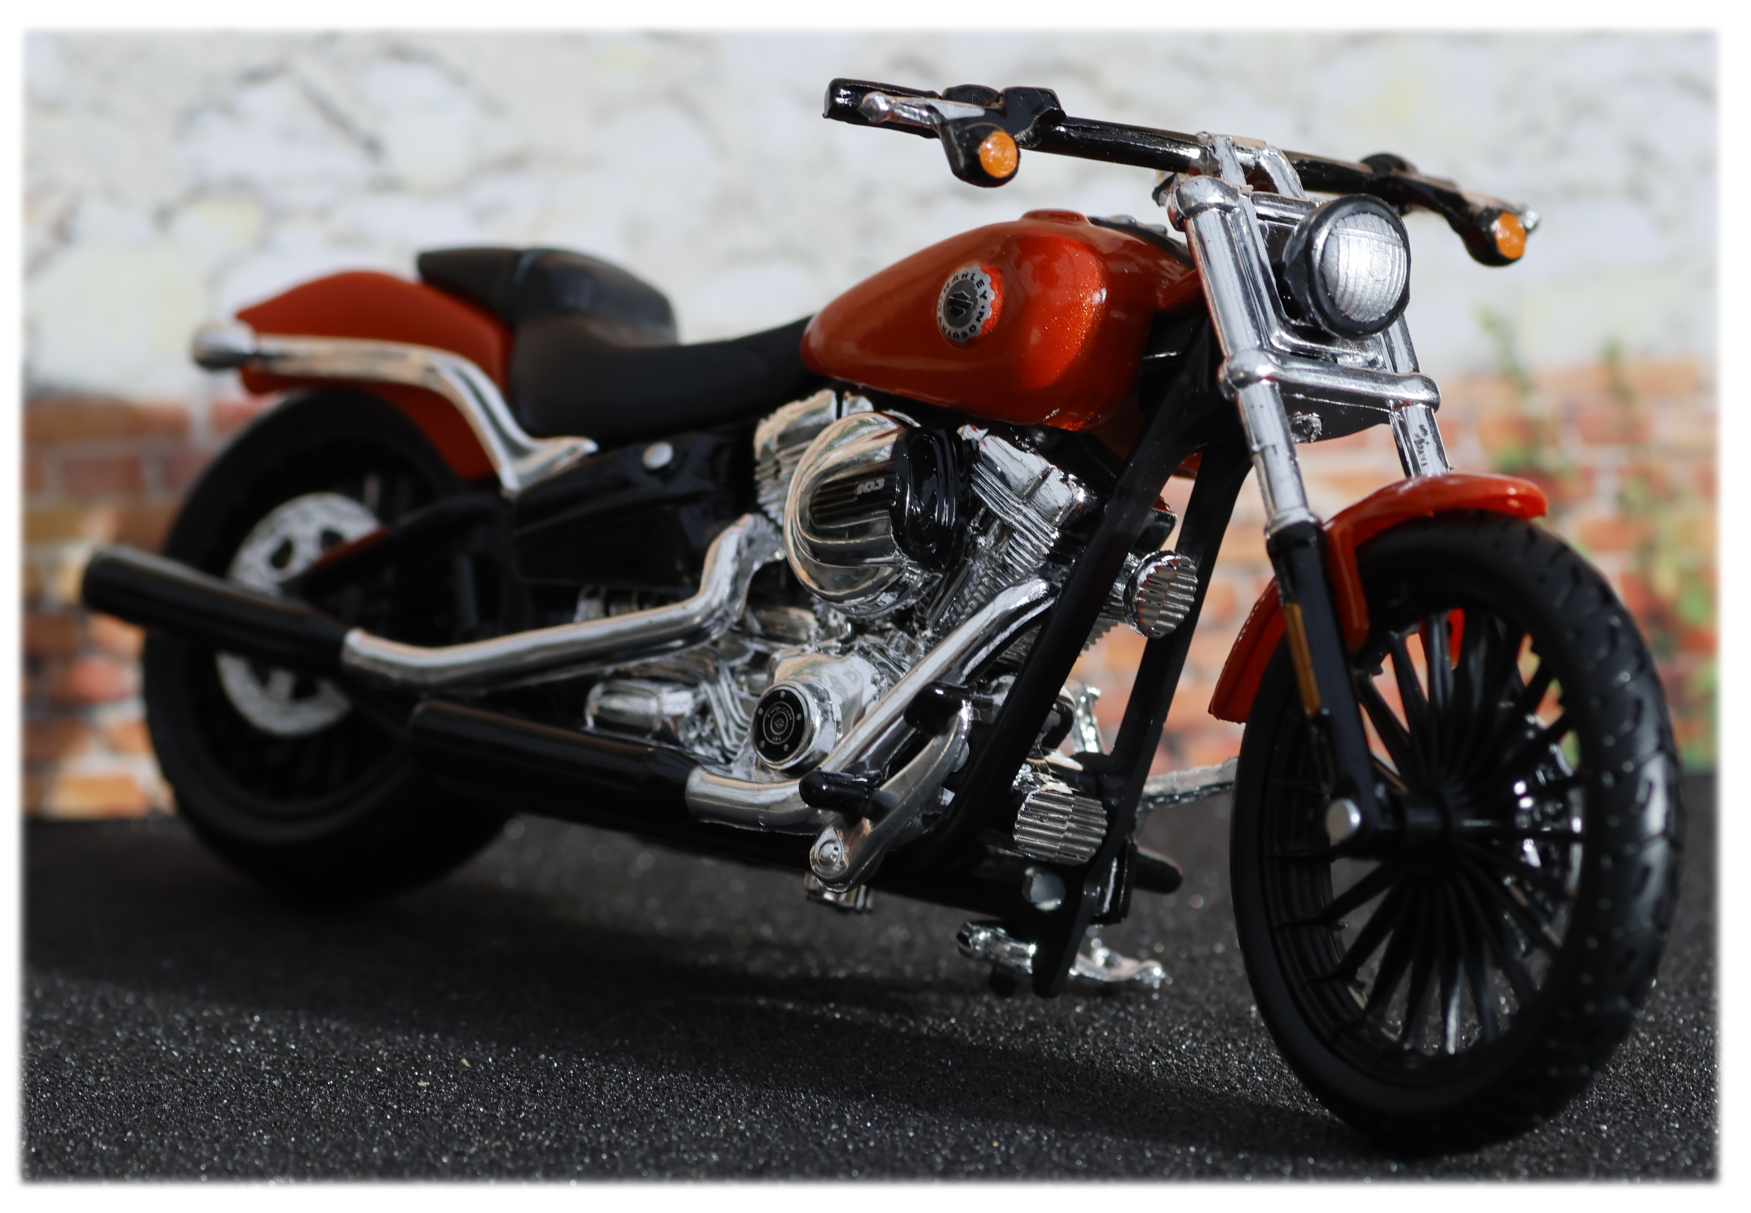 Harley Davidson Breakout 2016